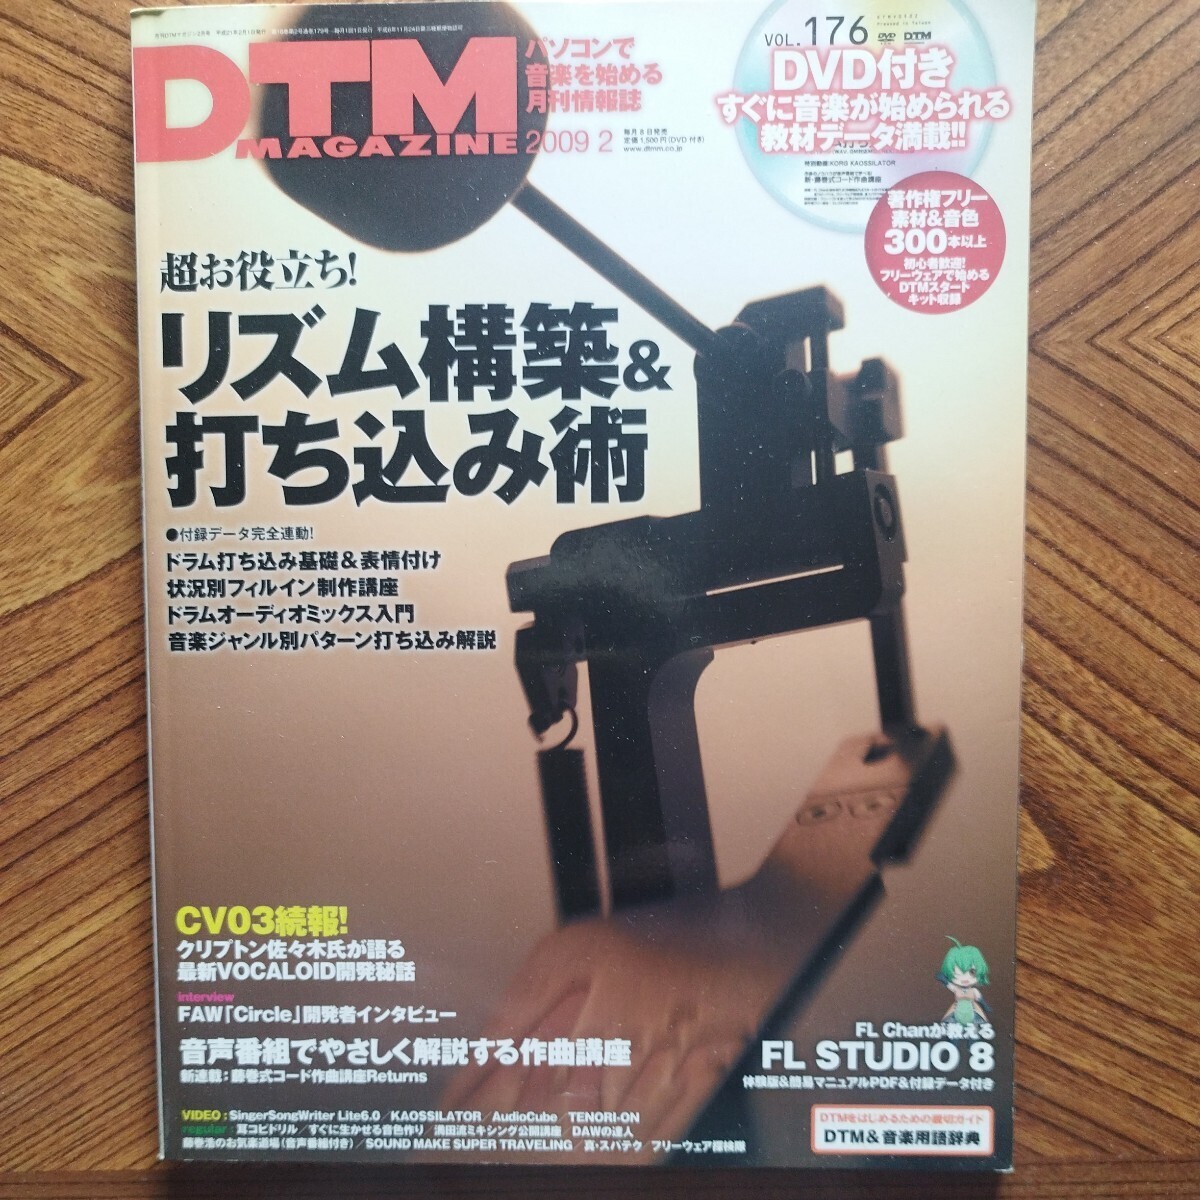 DTM MAGAZINE2009.2 vol.176 super . position ..! rhythm construction & strike . included .